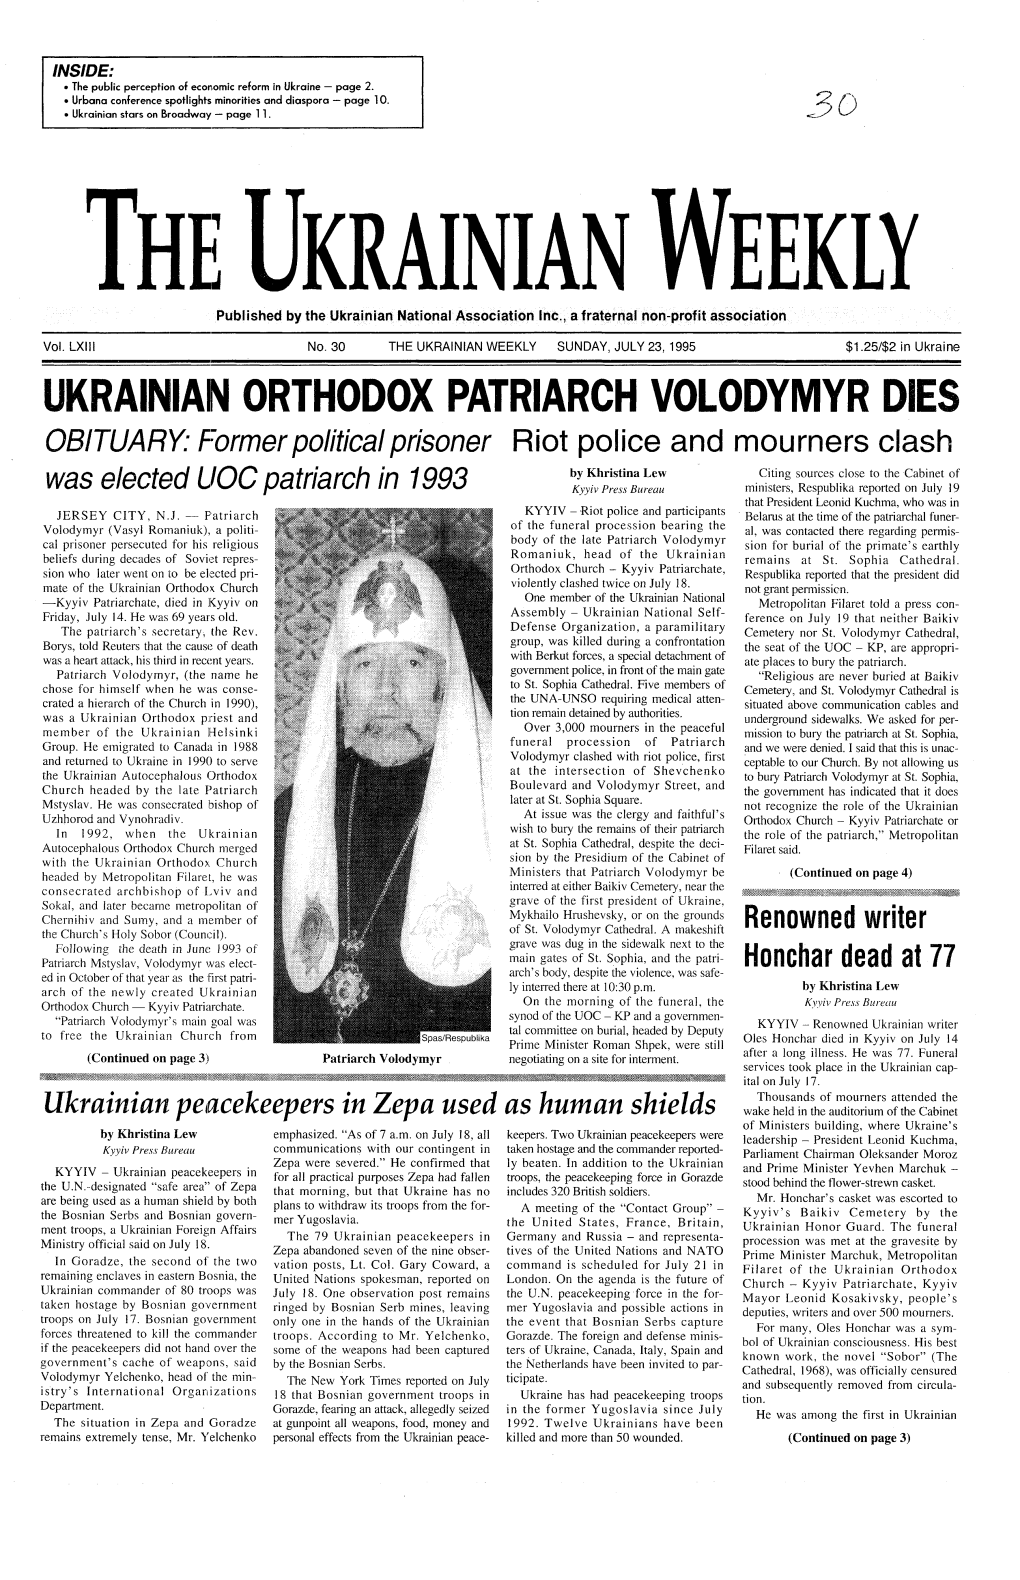 The Ukrainian Weekly 1995, No.30